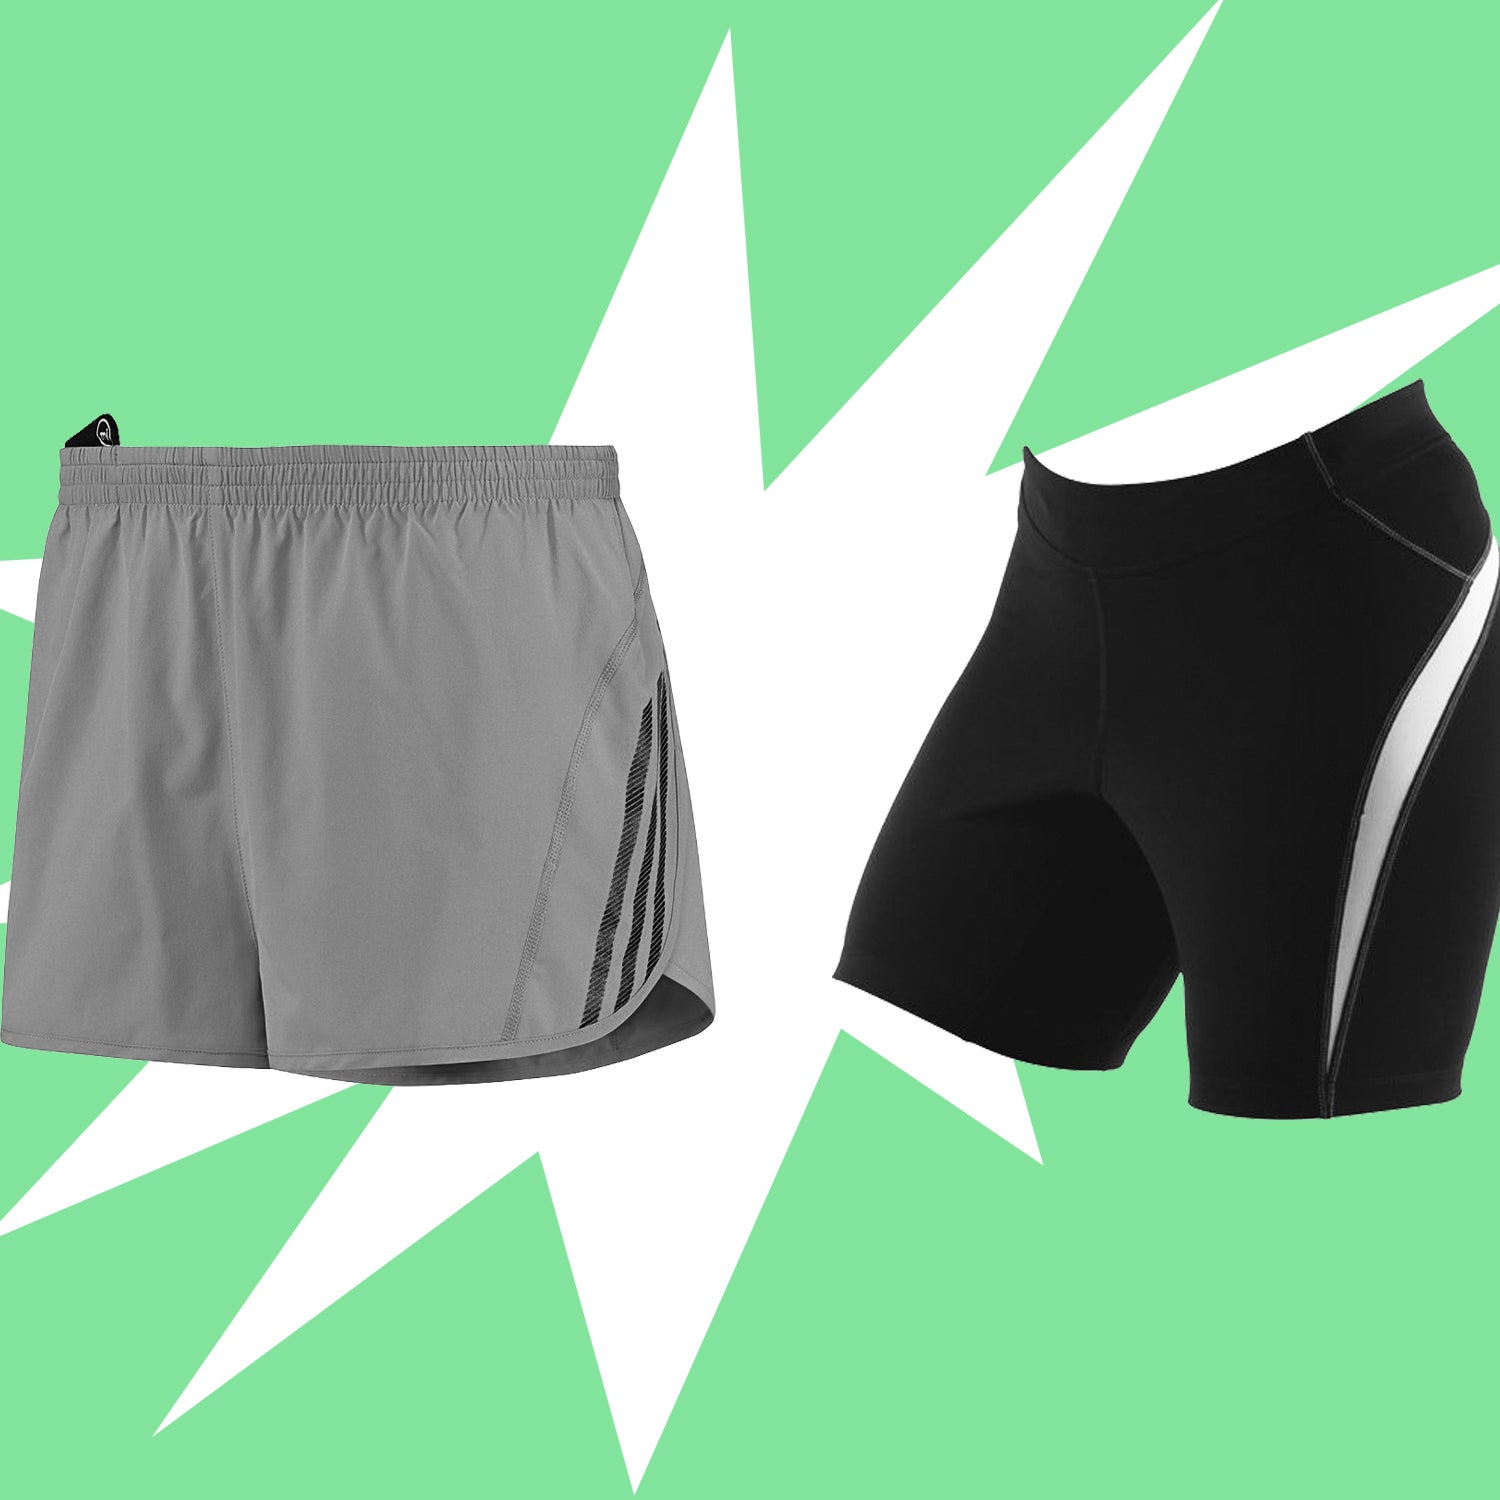 Short Shorts vs. Tights Throwdown